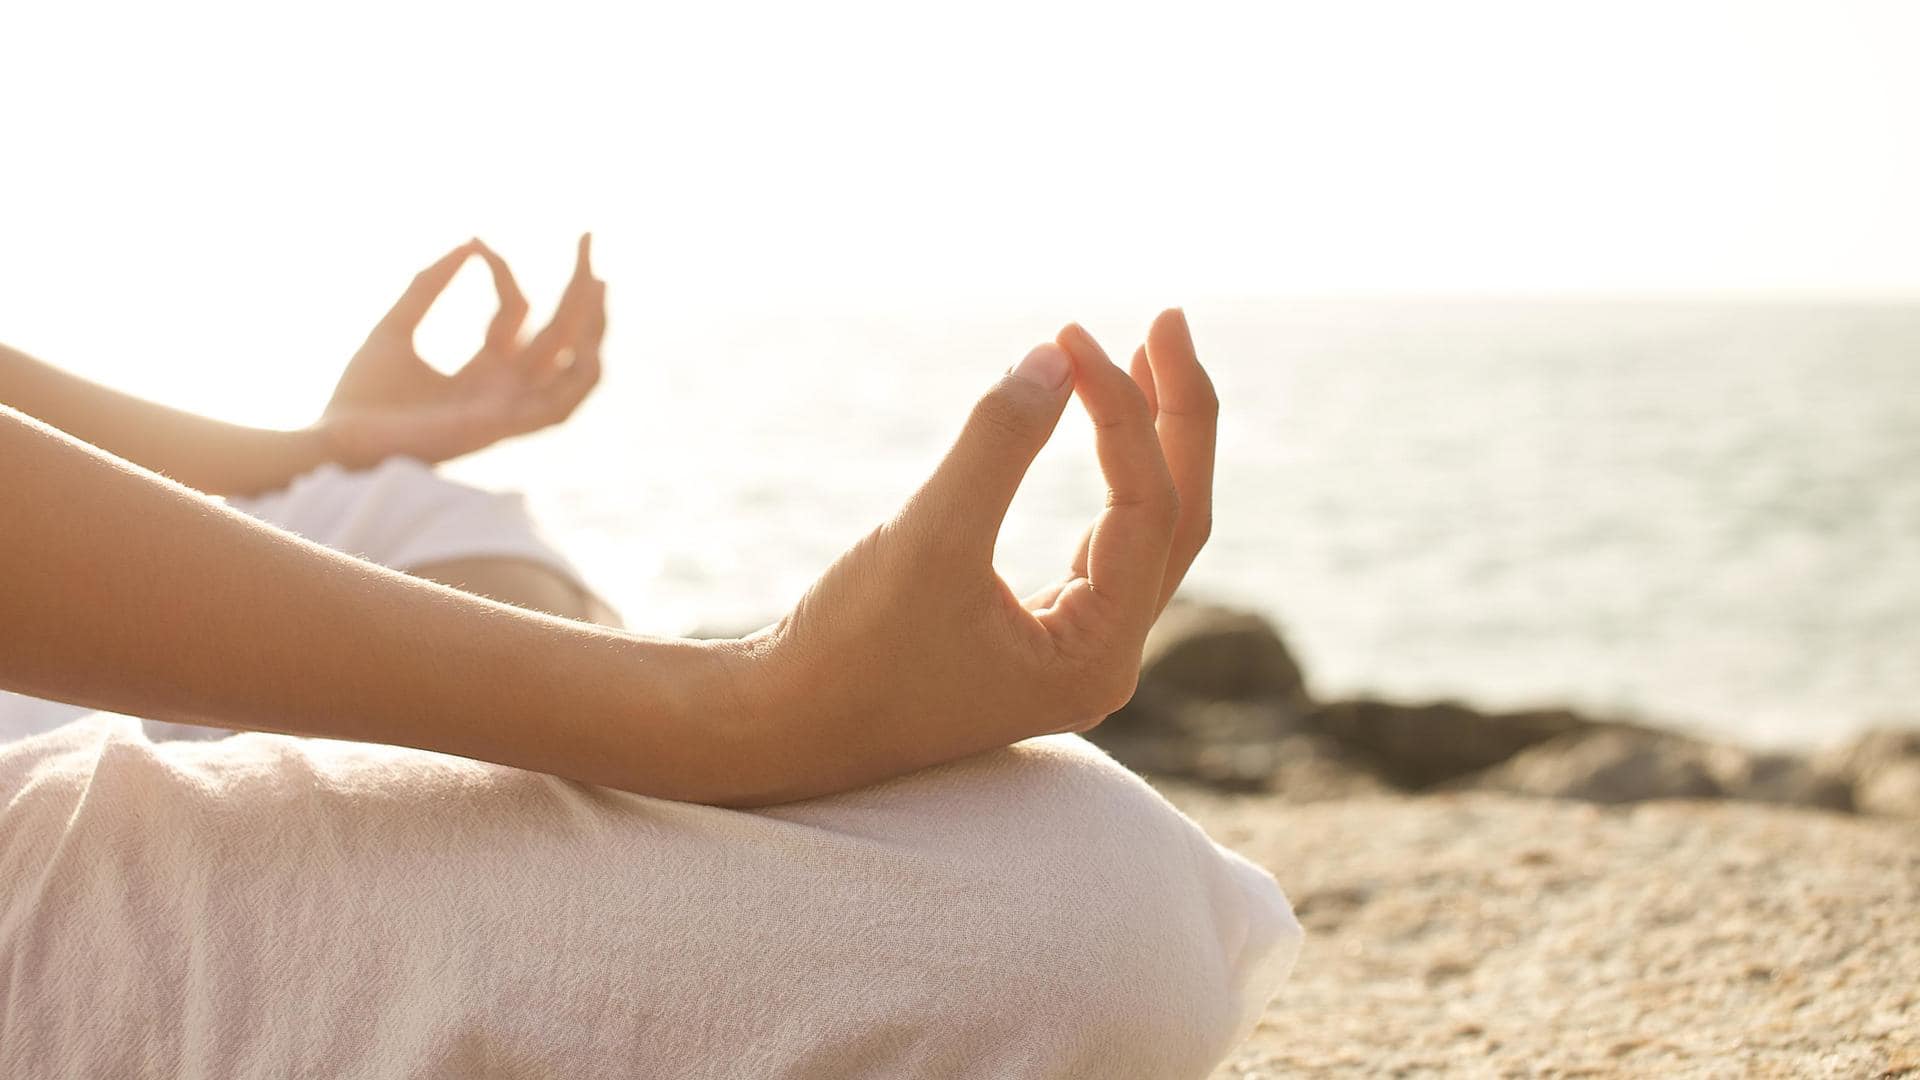 Sleep apnea: These yoga poses can help you breathe better